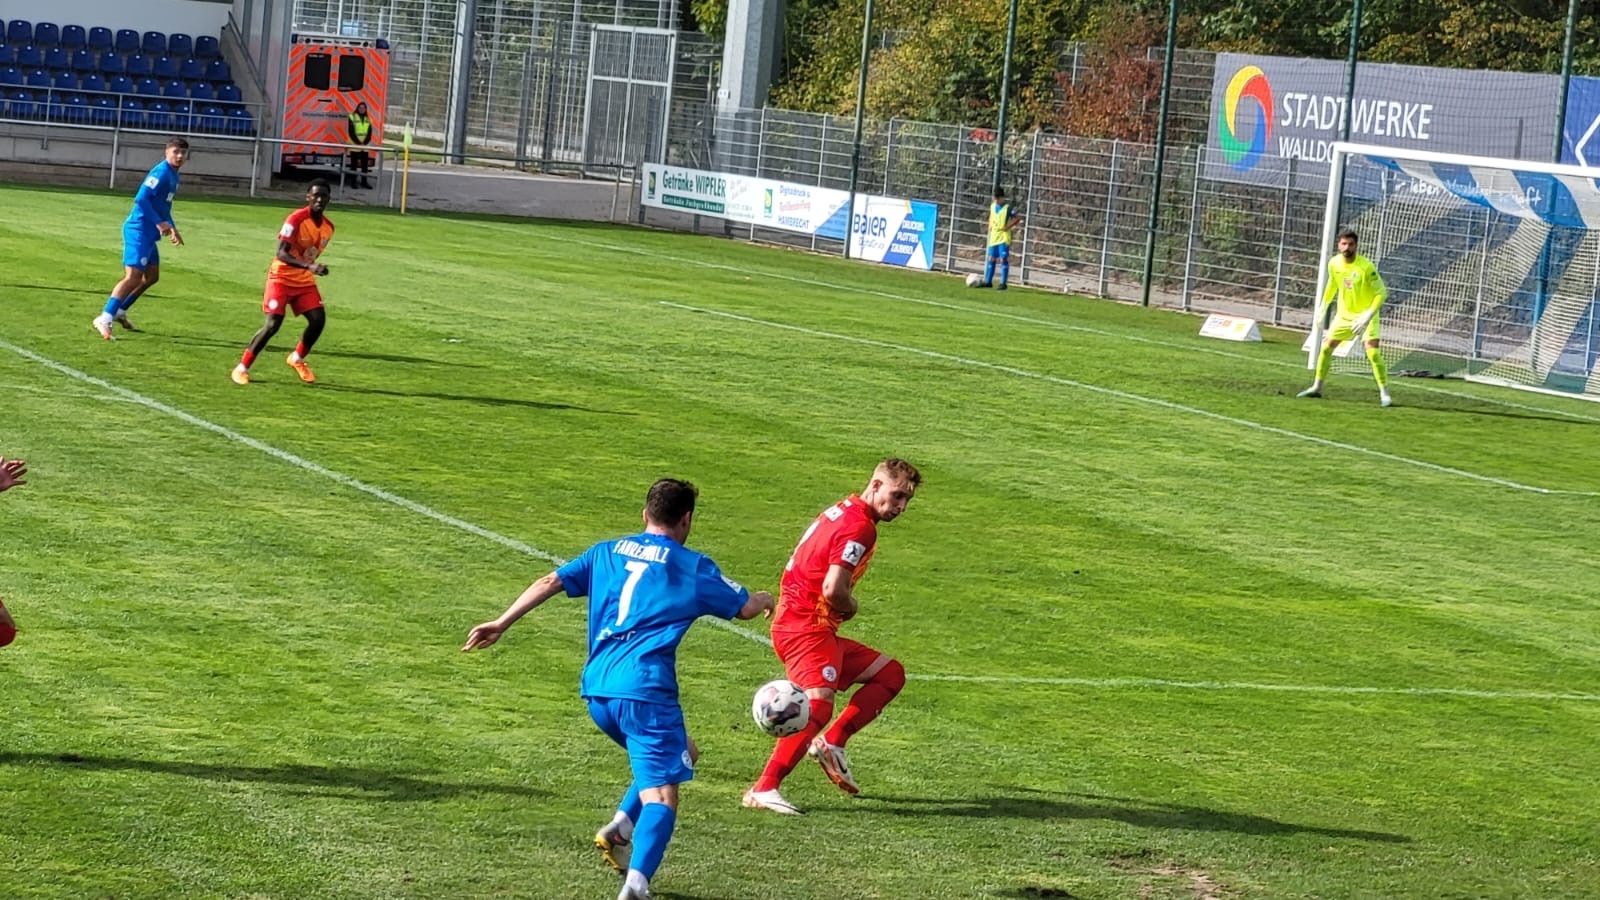 FC-Astoria Walldorf - KSV Hessen Kassel